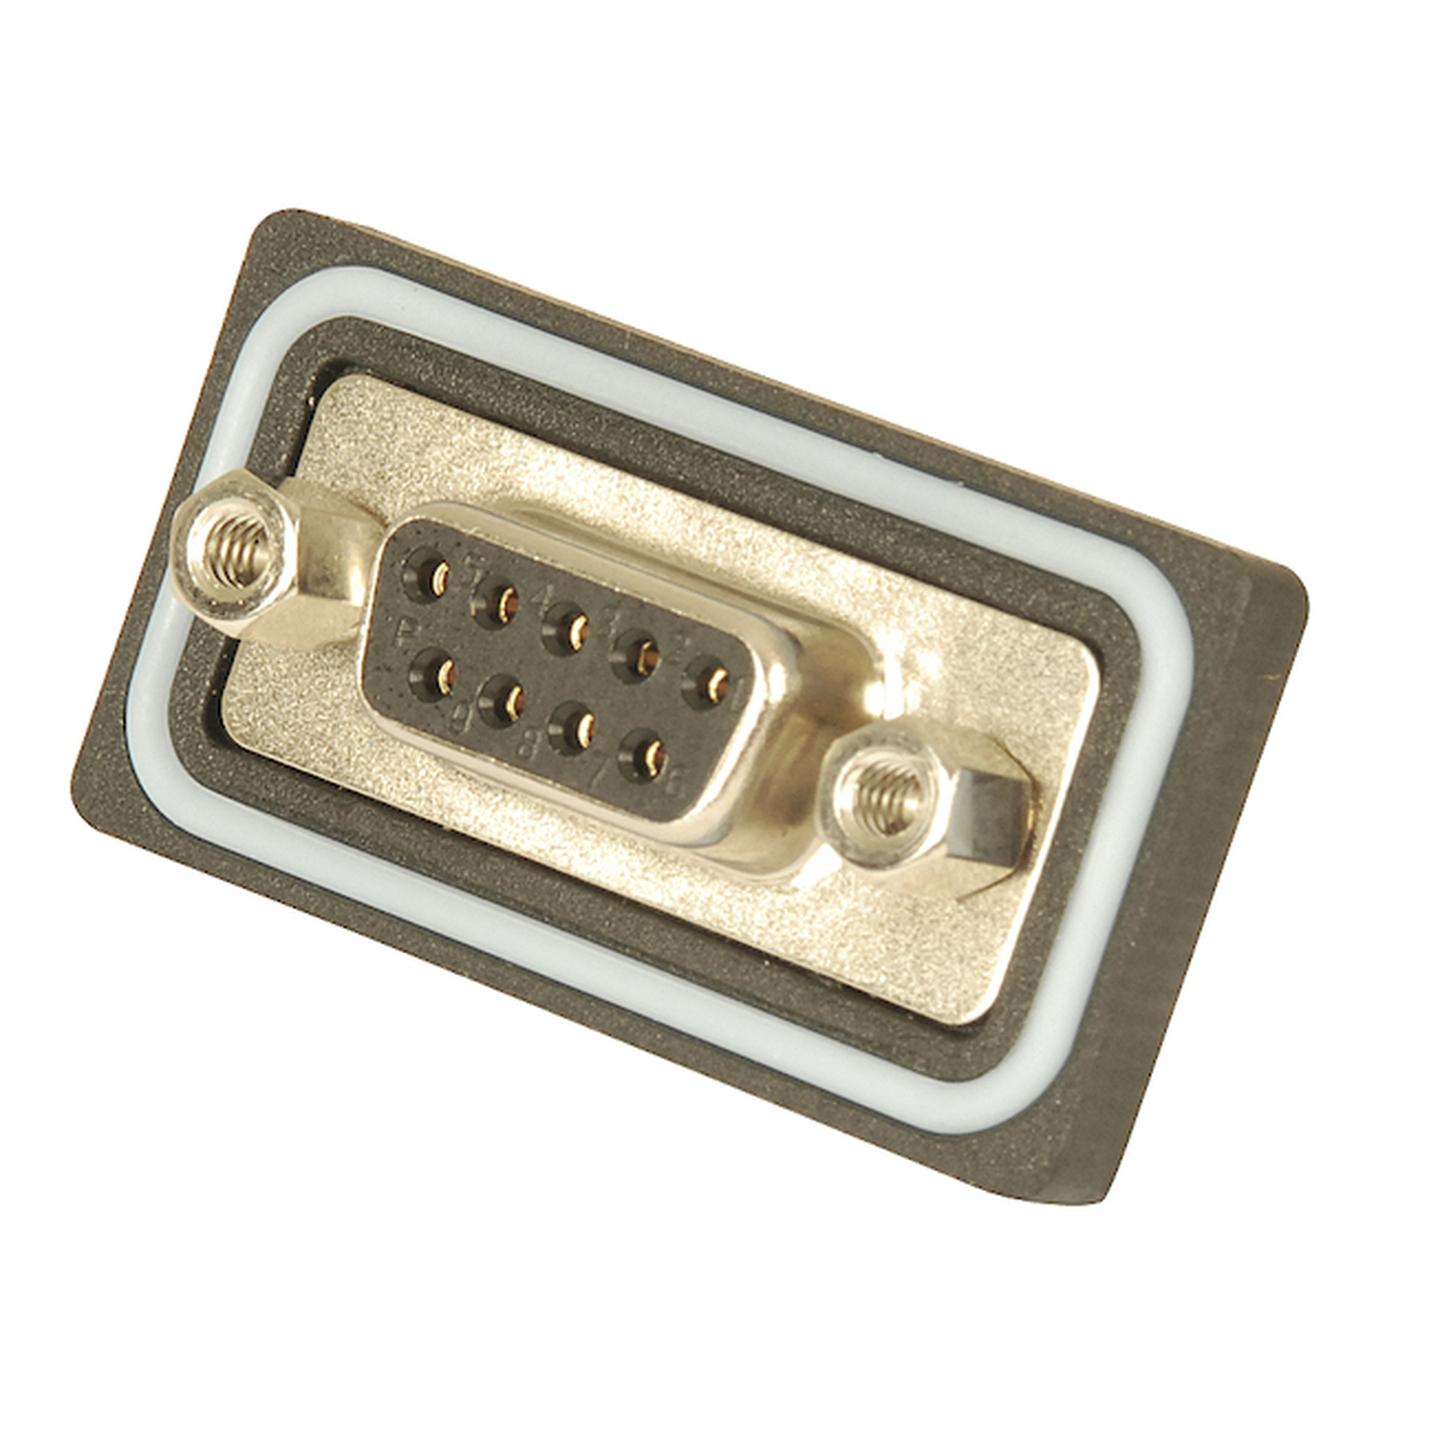 9 Pin IP67 D-Sub Socket Connector